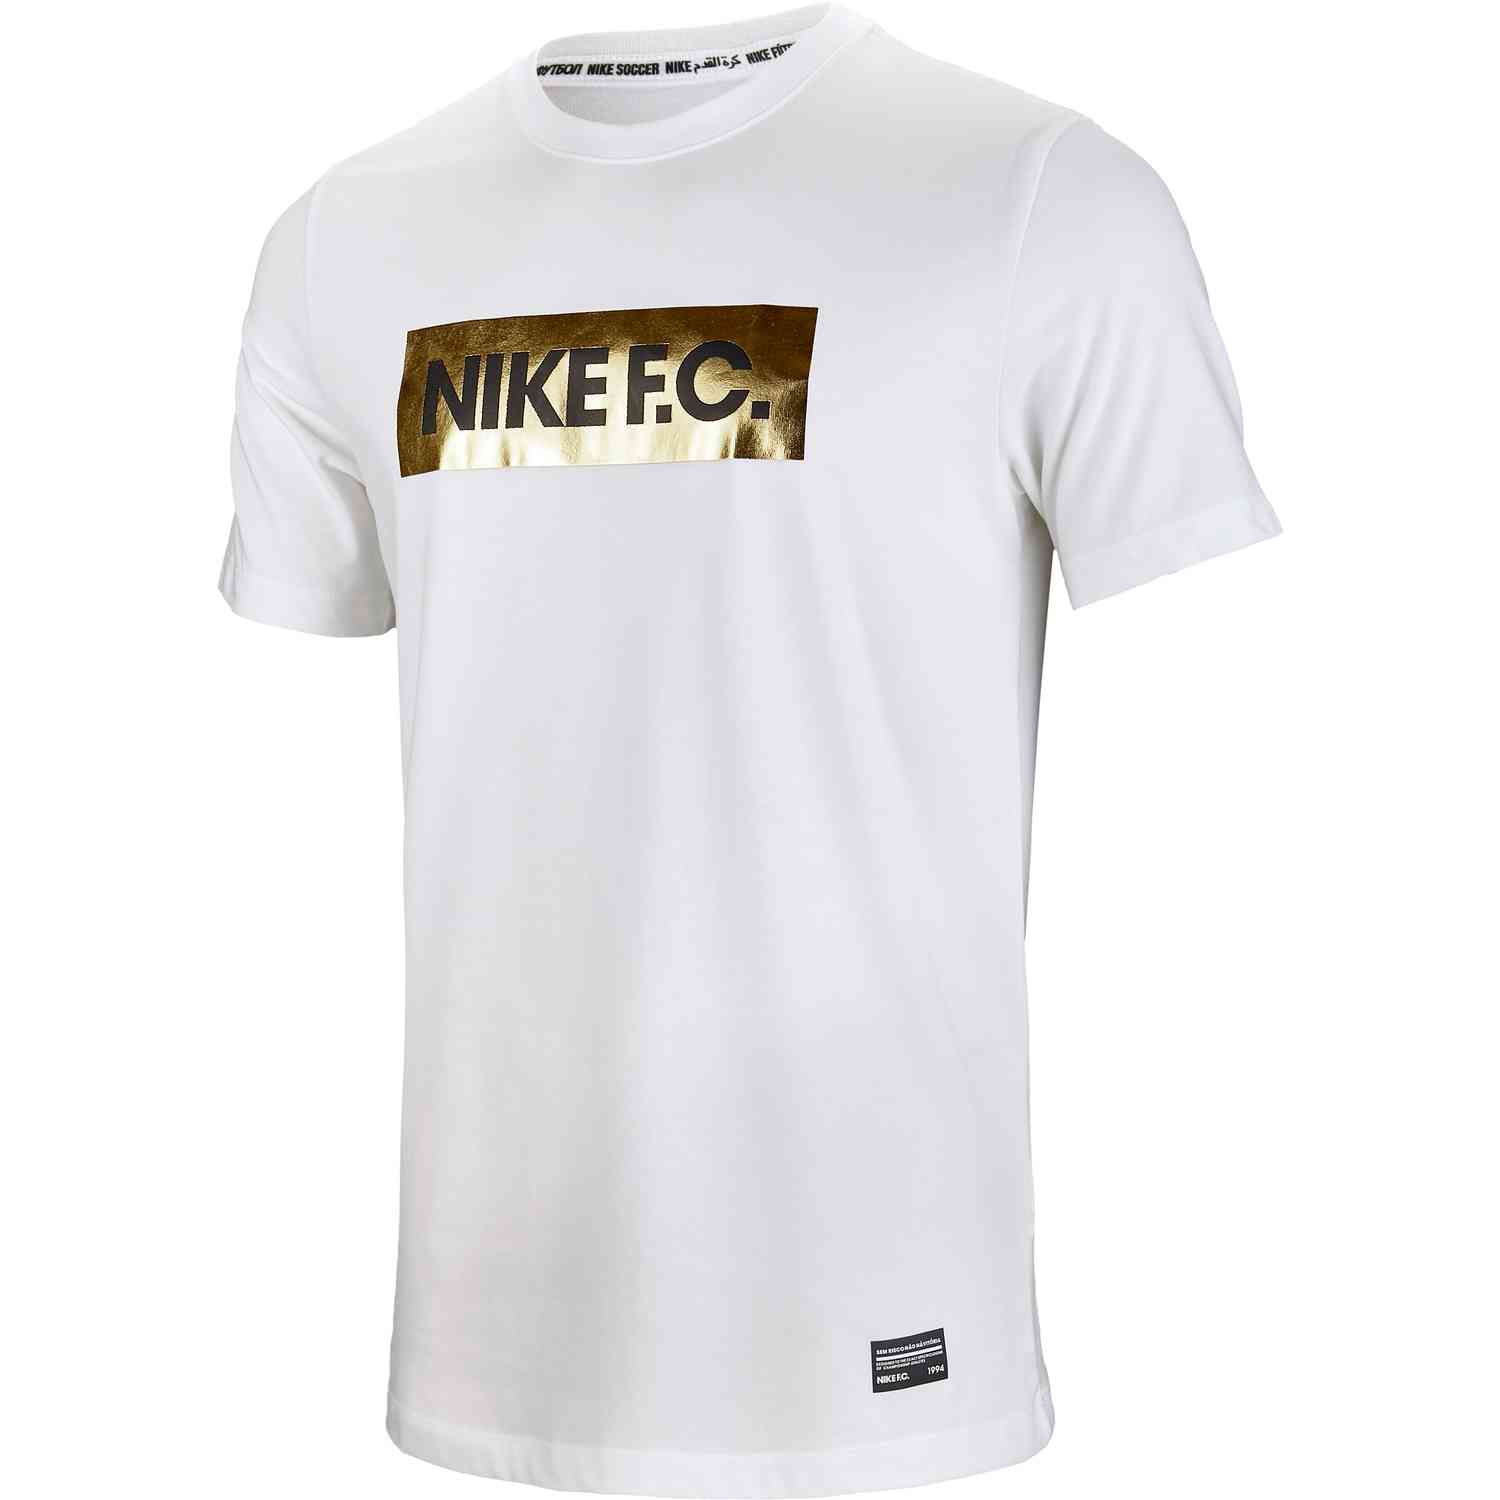 Nike FC Gold Block Tee - White - SoccerPro